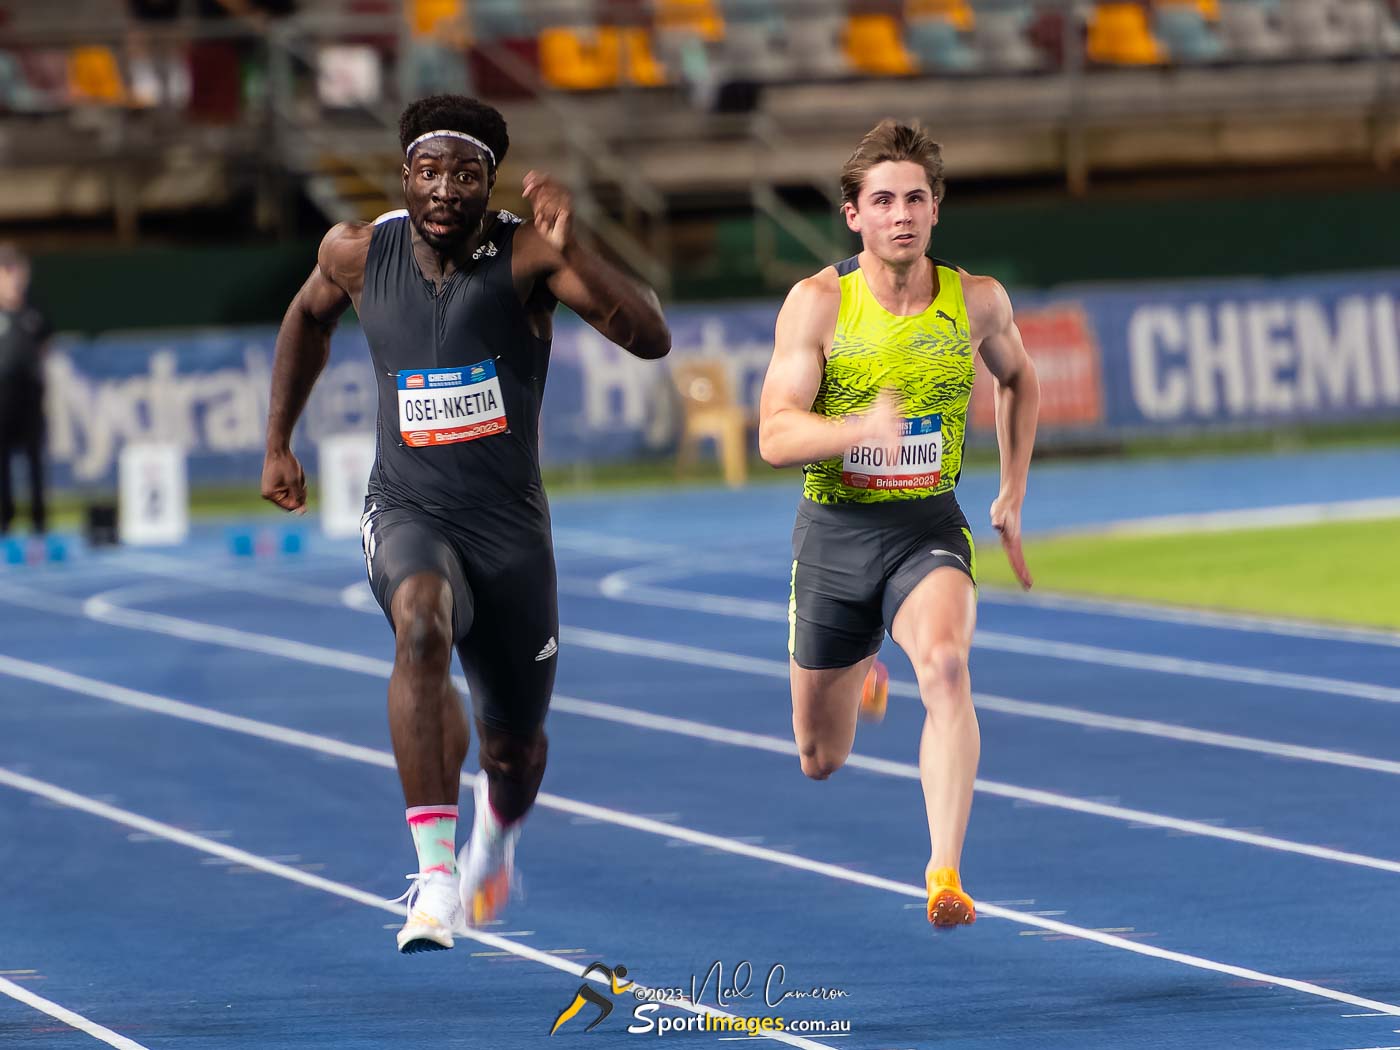 Edward Osei-Nketia, Rohan Browning, Men's 100m A Race